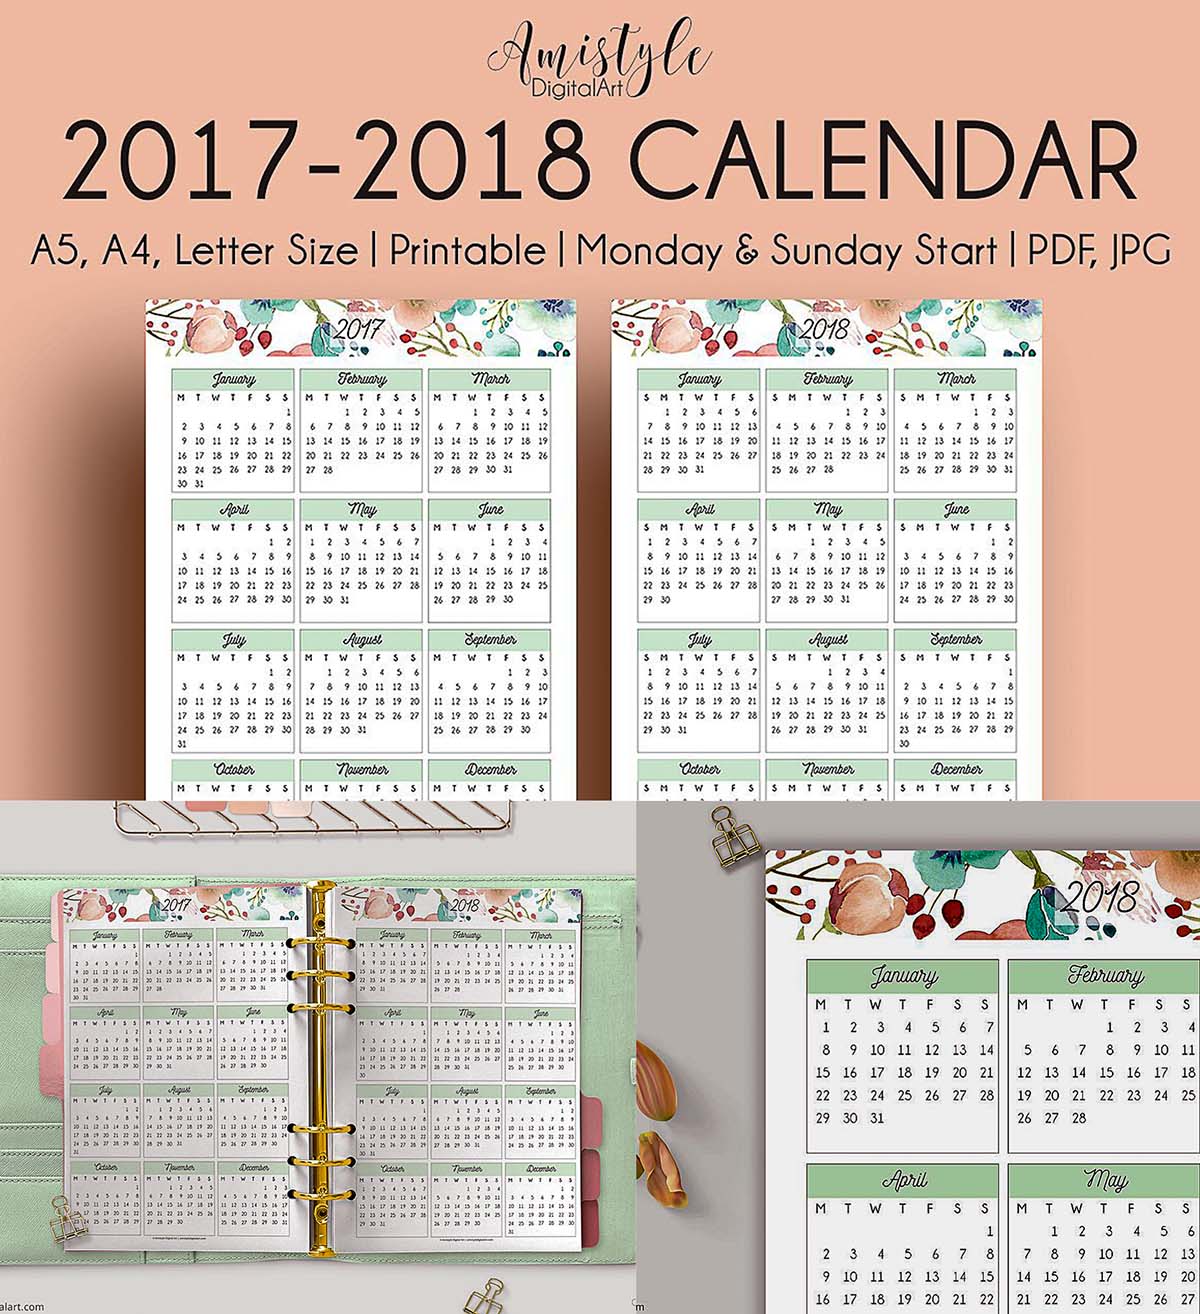 Printable calendar year 2017-2018